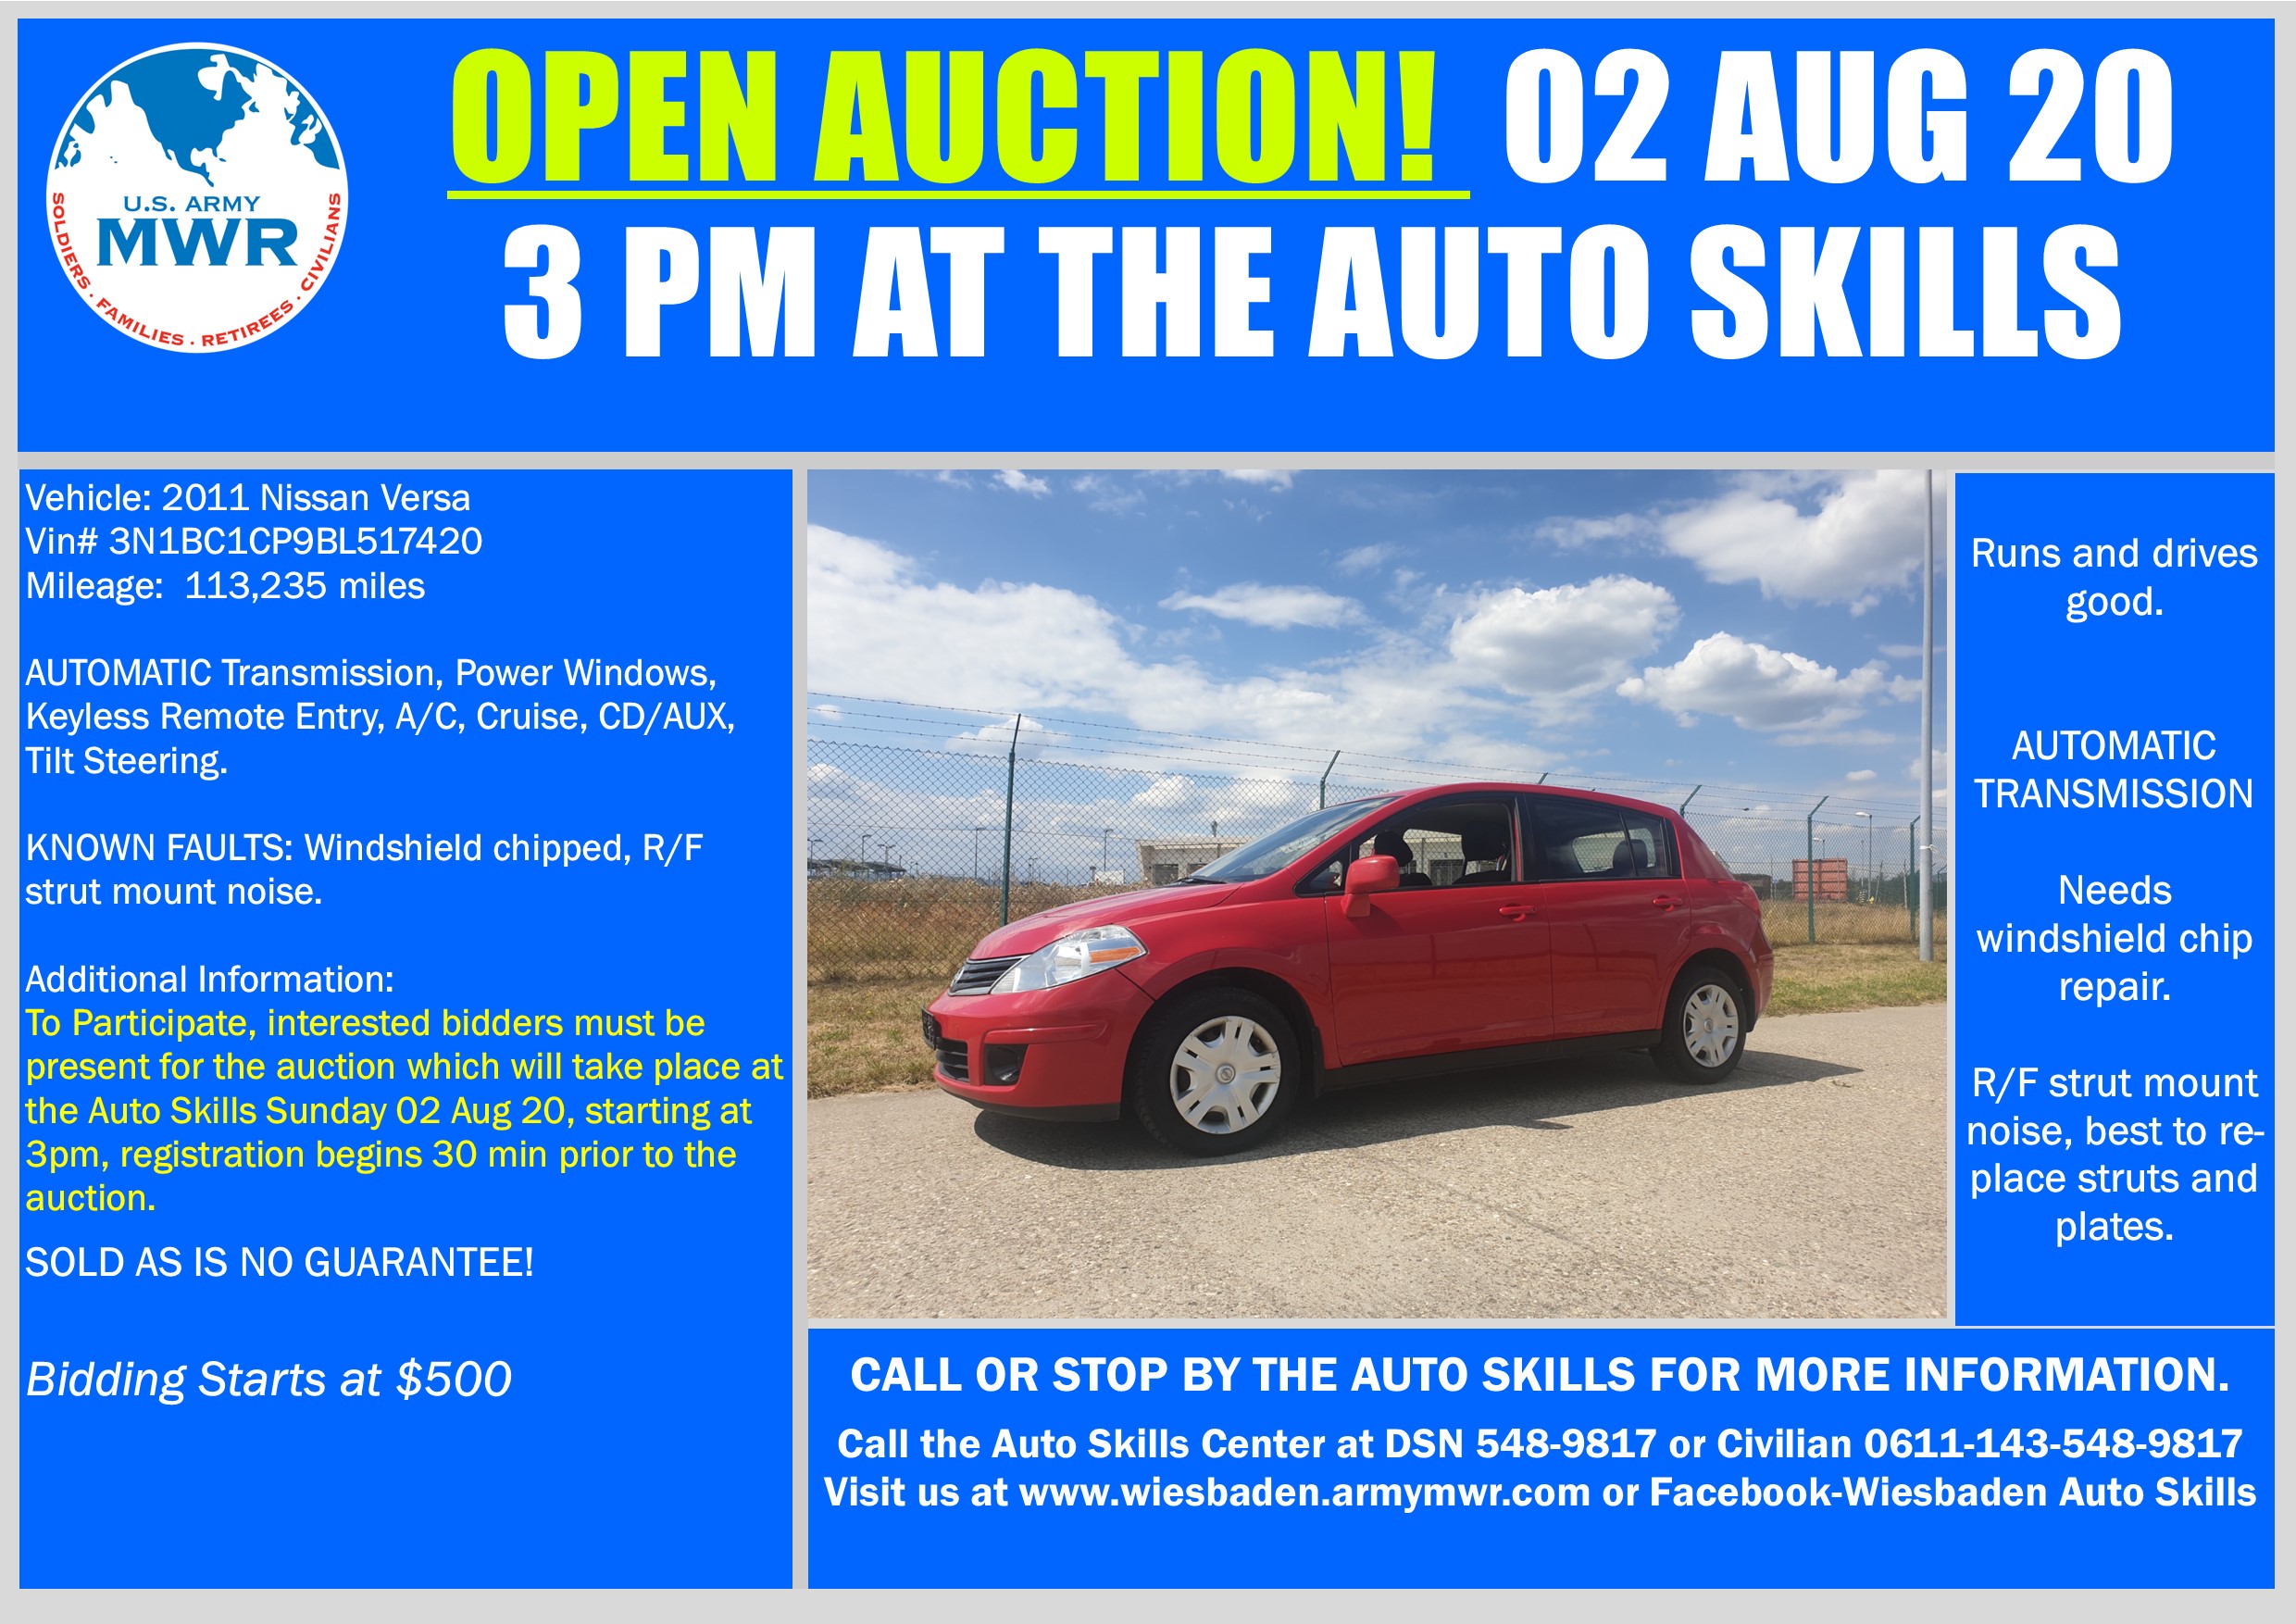 Sale Nissan versa Open Auction 2 Aug 20.jpg